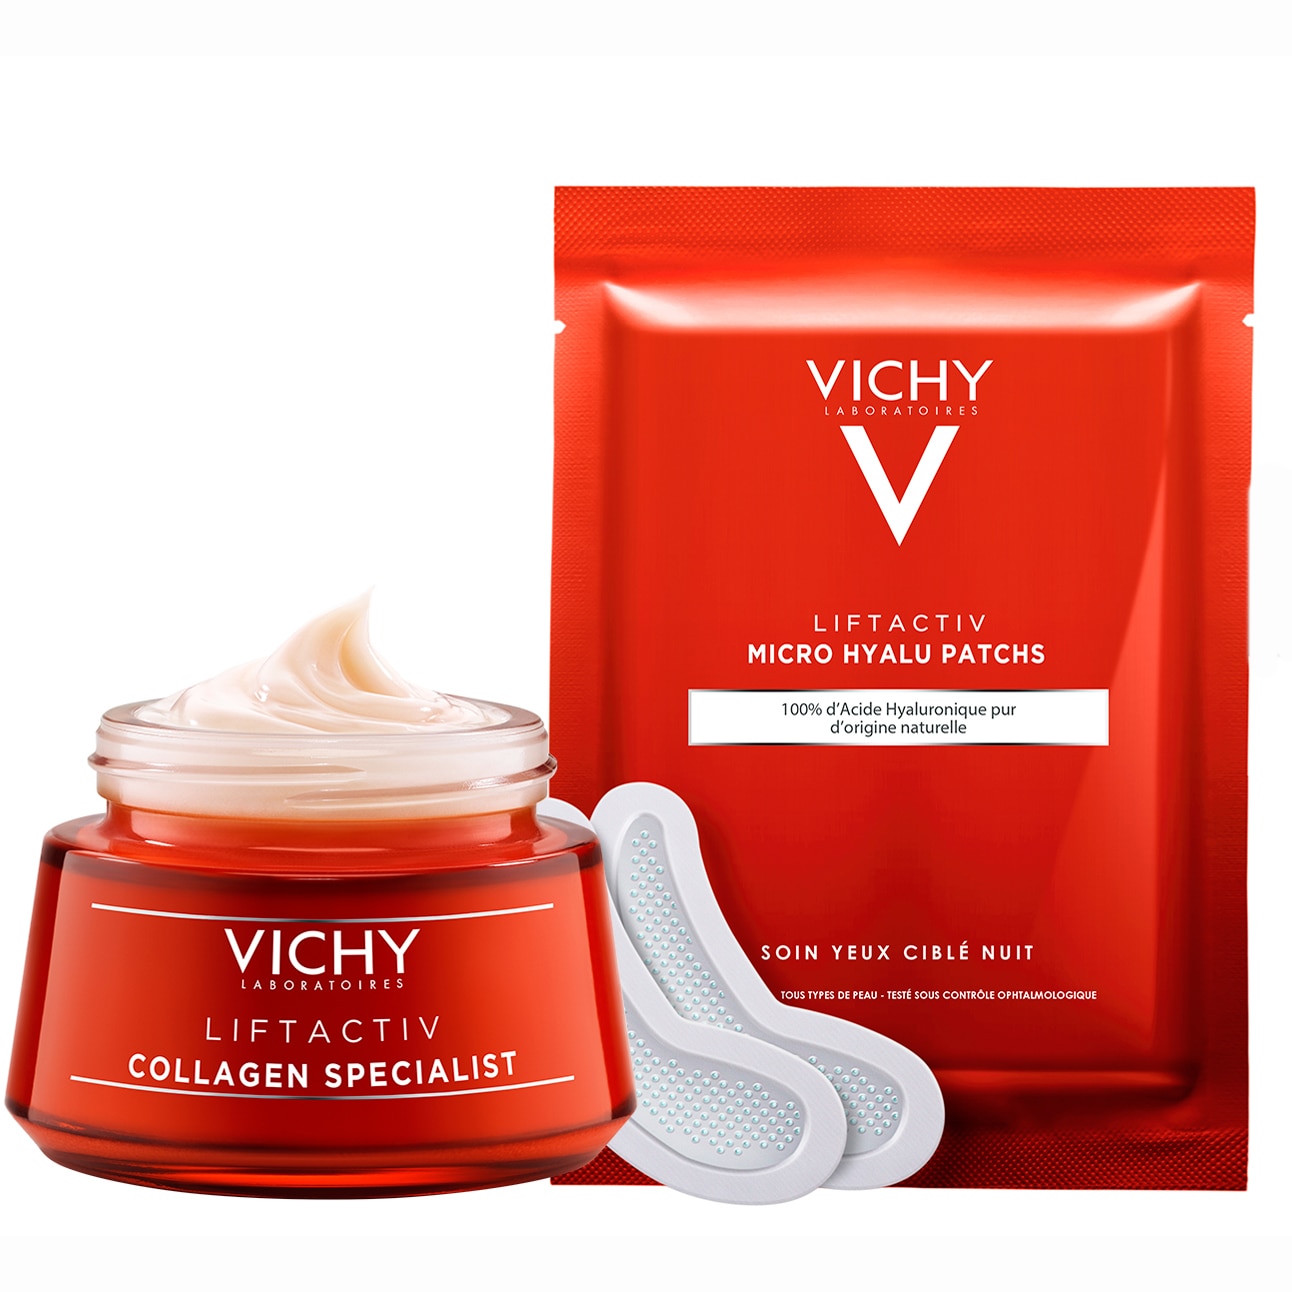 Cosmetice pentru femei Vichy - Tip: Antirid - ShopMania